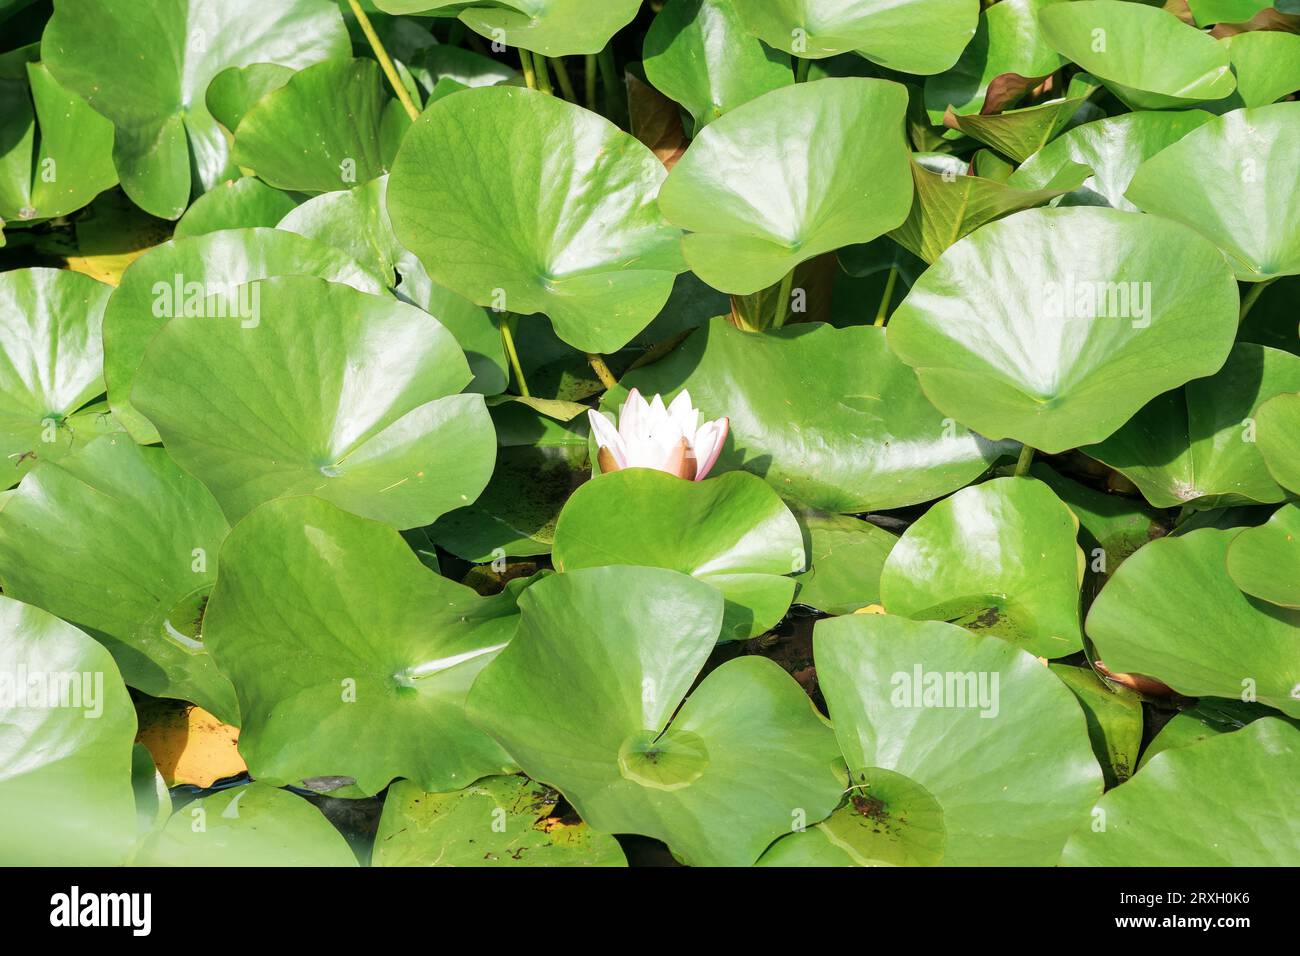 beautiful lotus flower among leaves in natural habitat Stock Photo